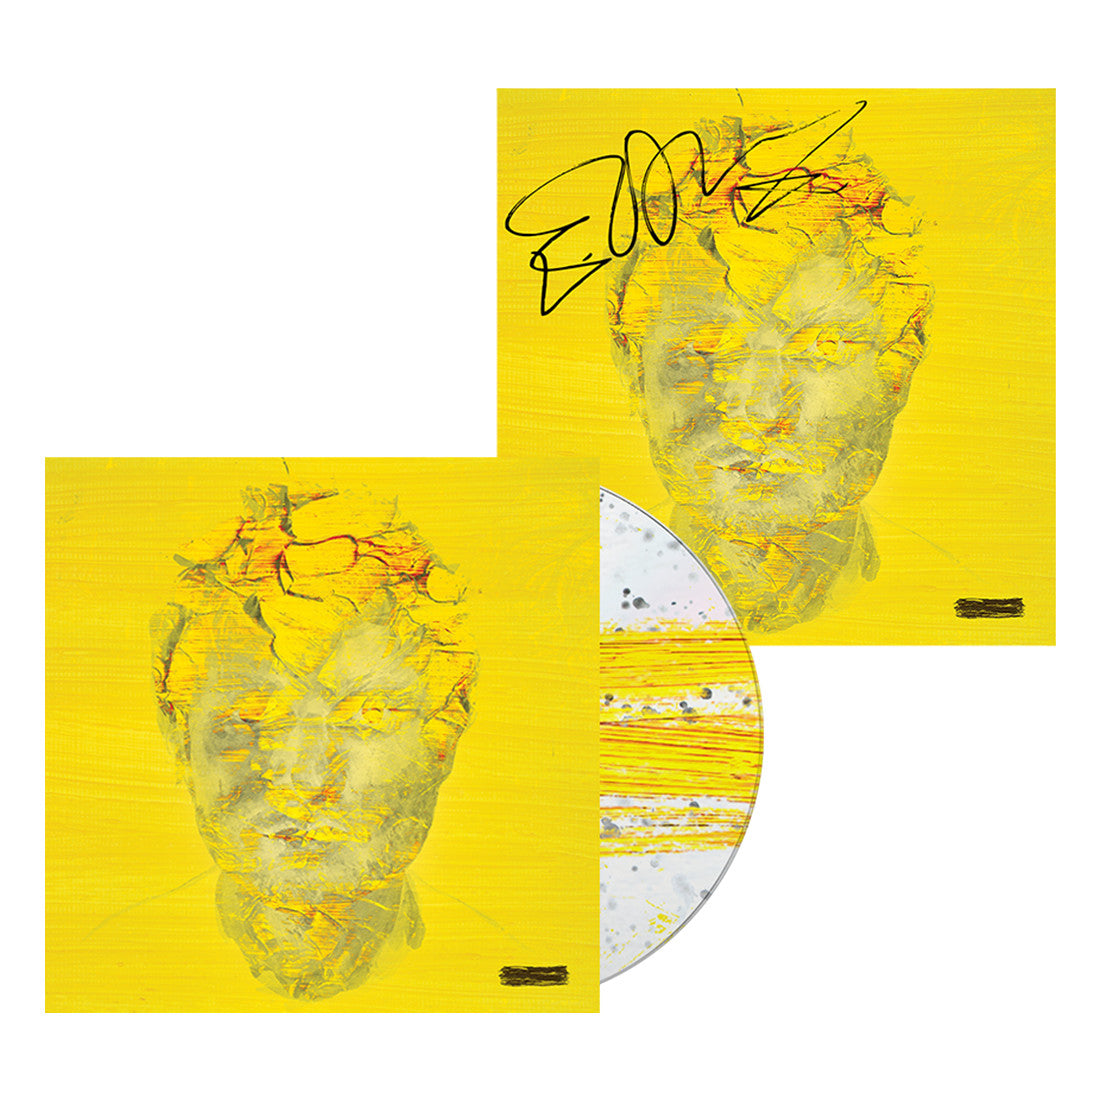 Ed Sheeran- - (Subtract) (Indie Exclusive Autographed CD) (PREORDER) - Darkside Records